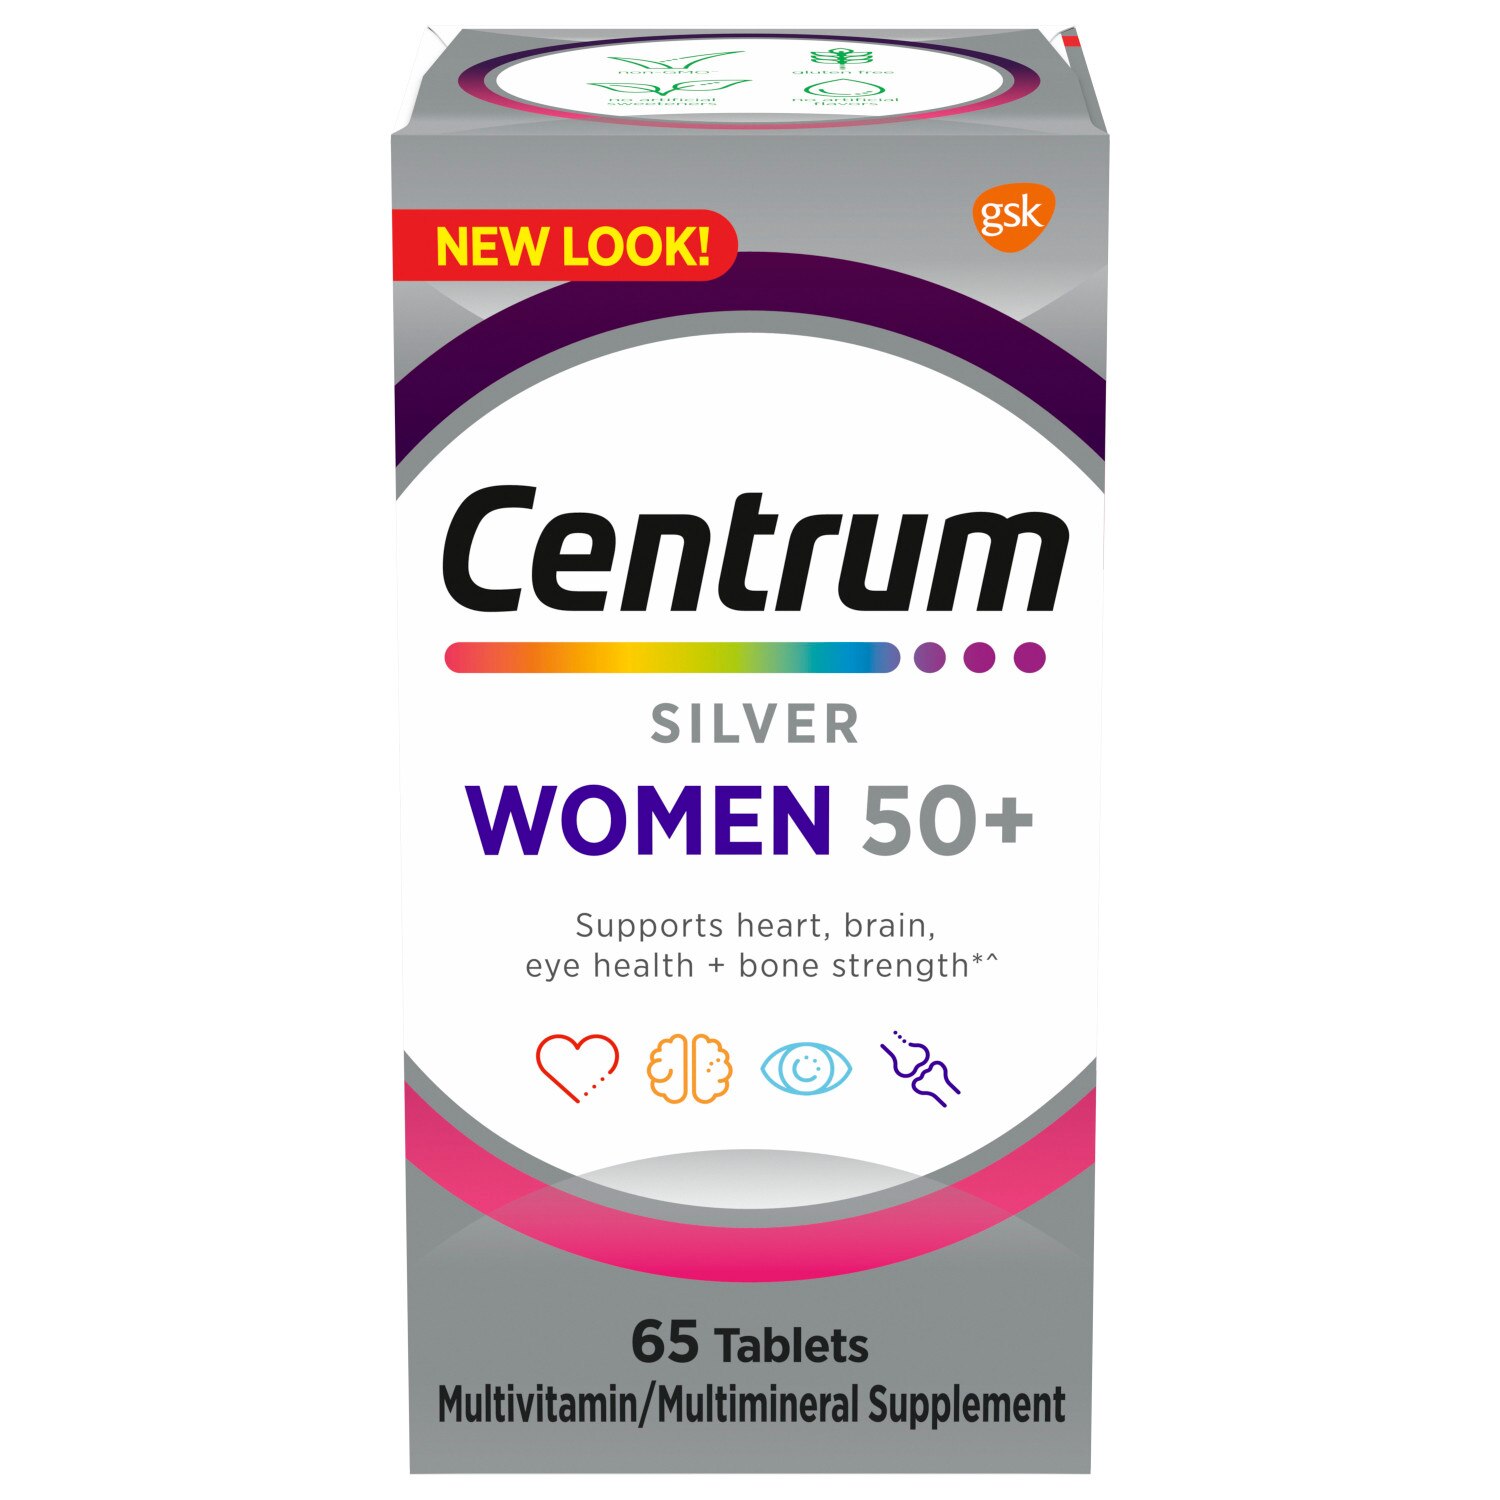 Centrum Silver Multivitamin Tablets for Women 50+